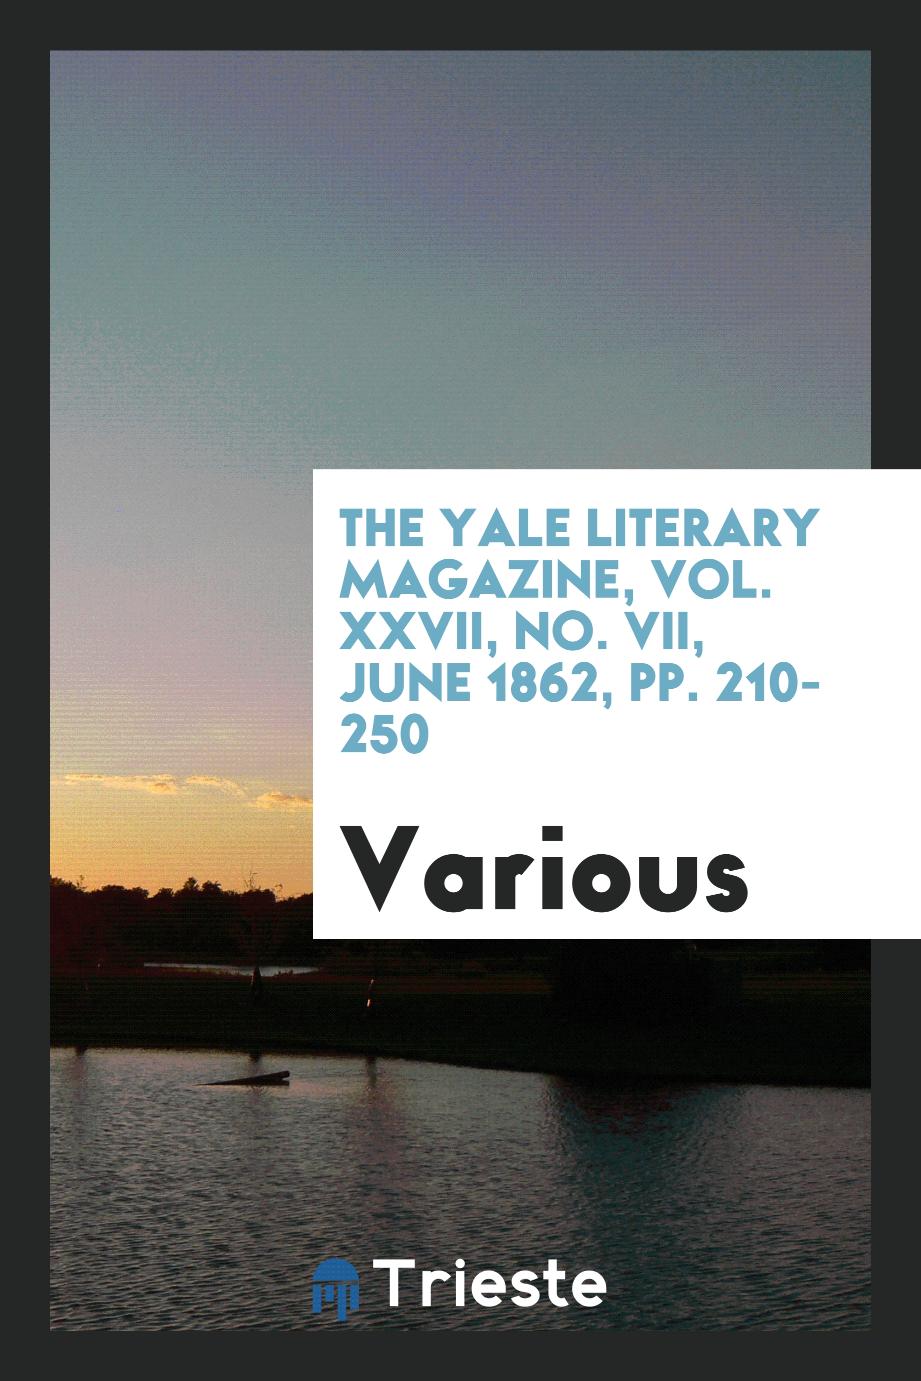 The Yale literary magazine, Vol. XXVII, No. VII, june 1862, pp. 210-250